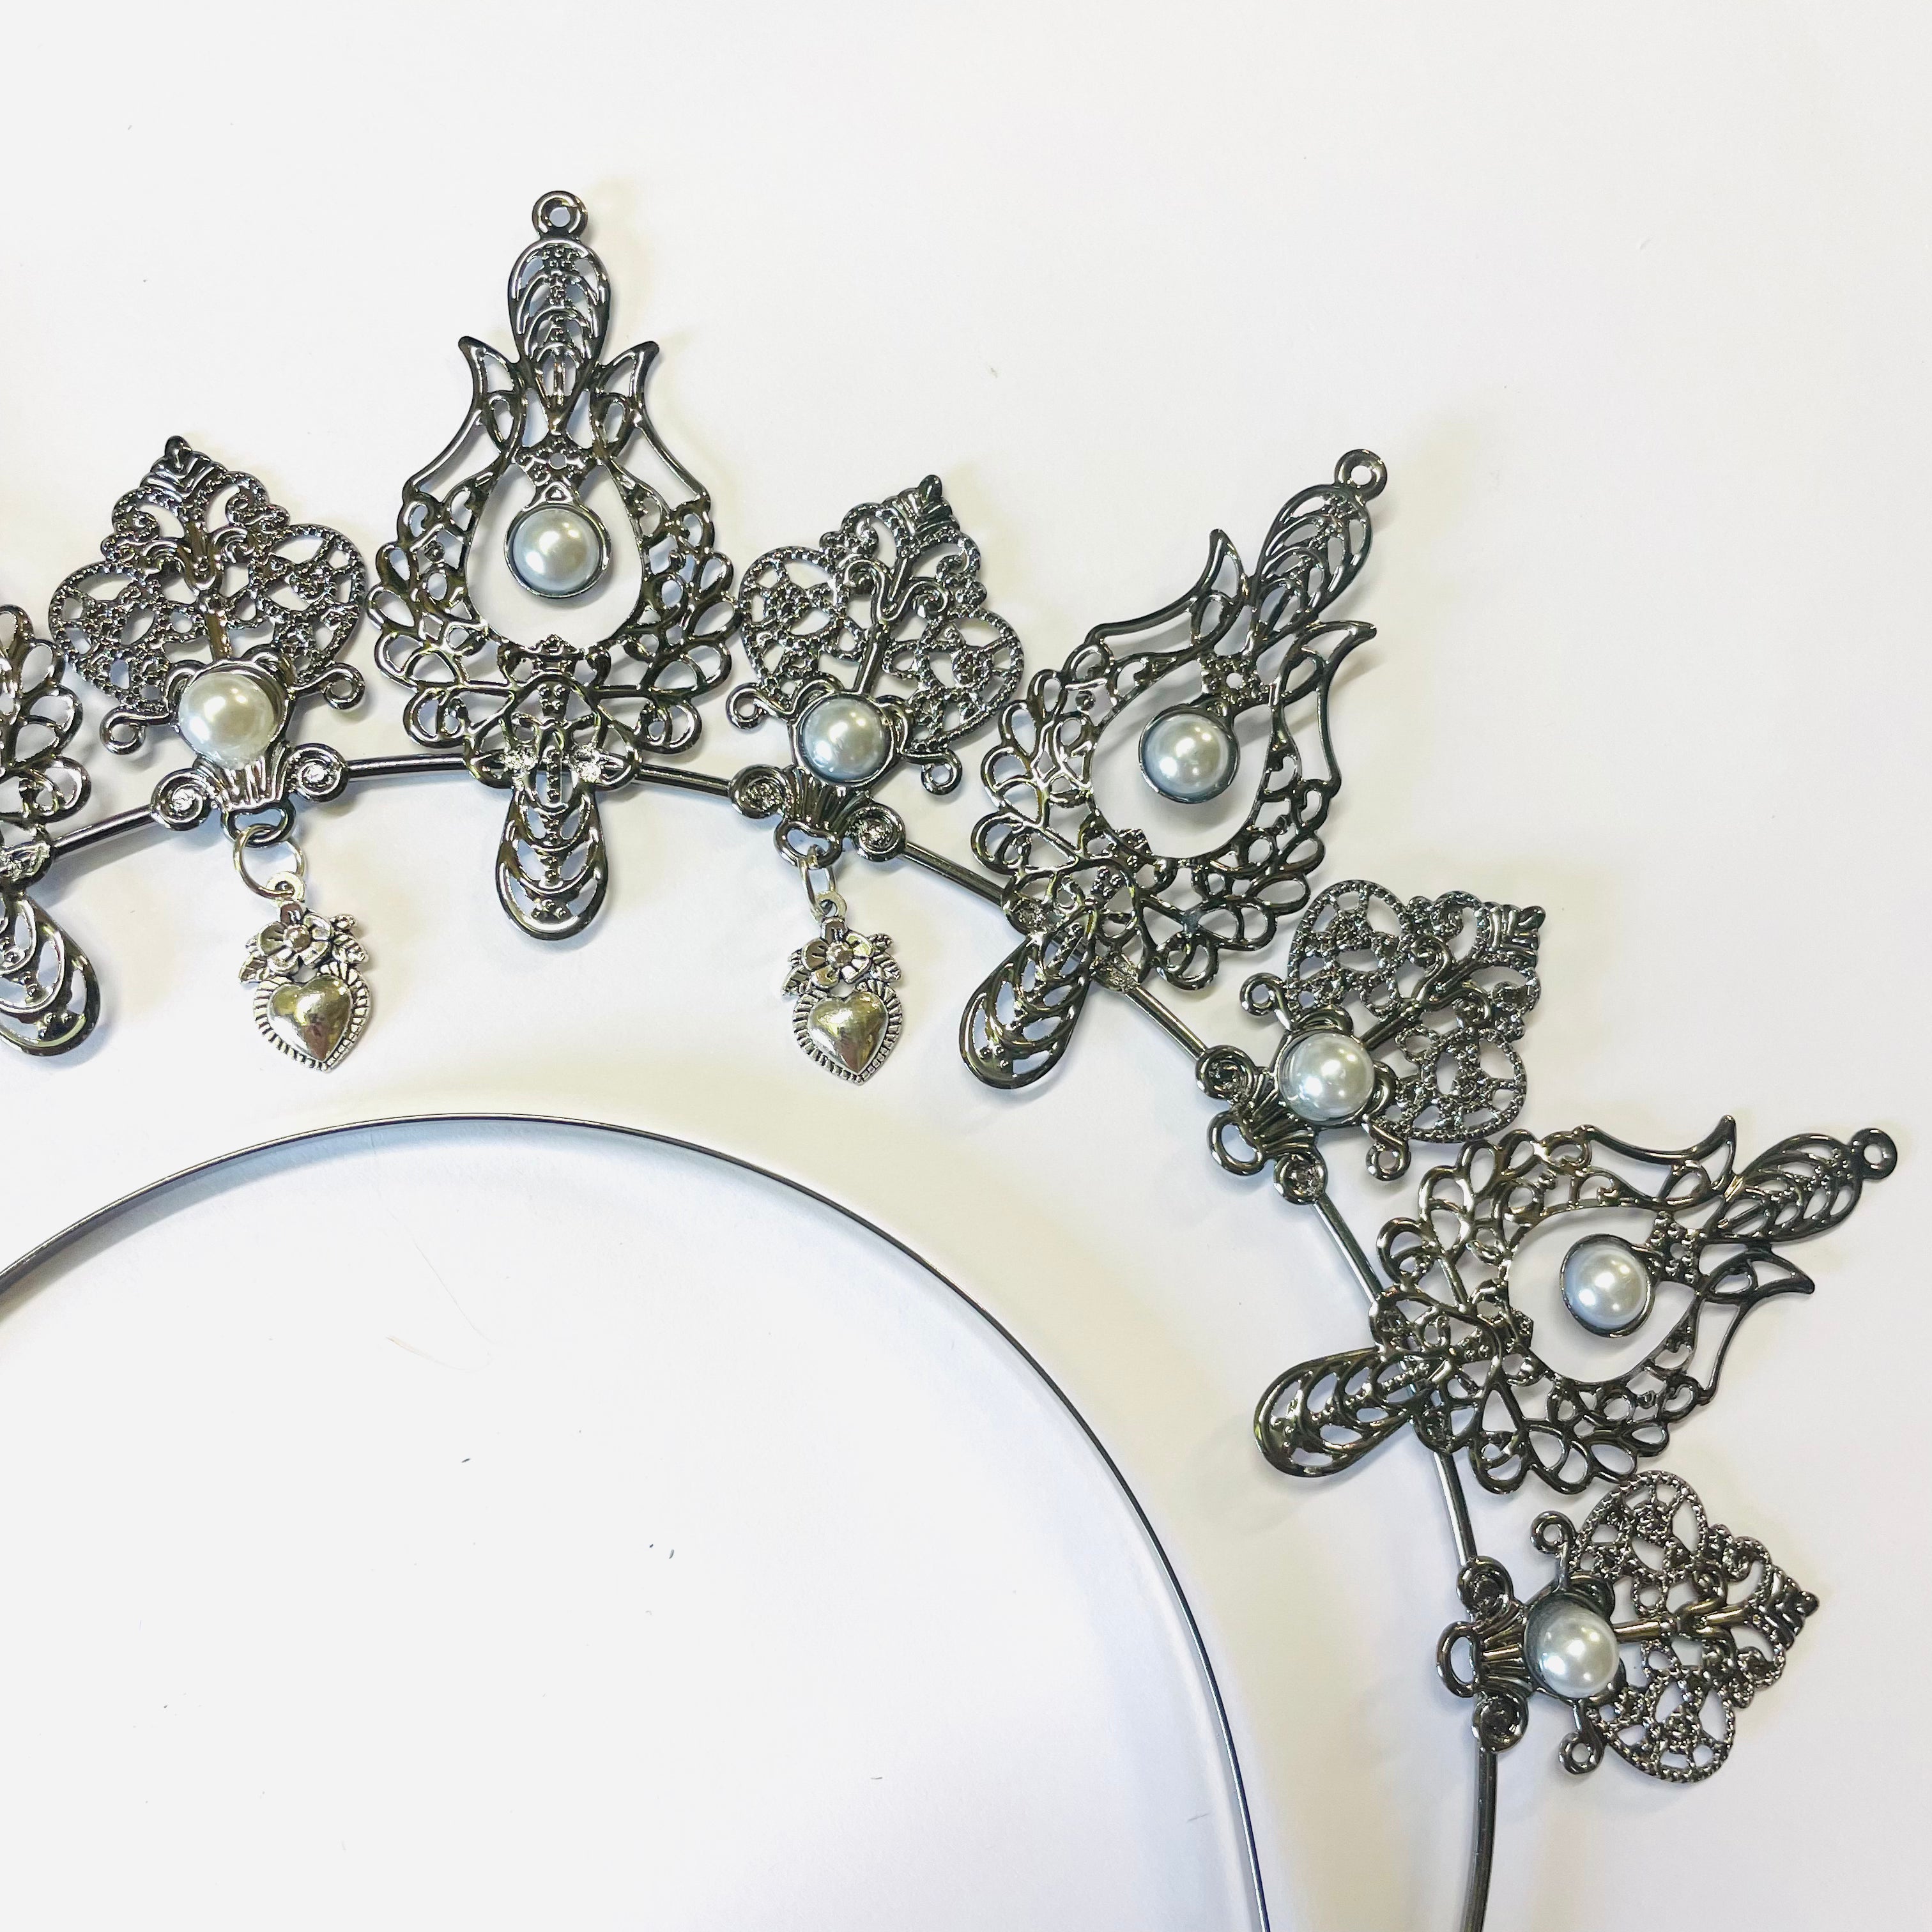 Gothic Goddess Spiked Halo Crown Festival Headdress Headband - Silver Style 3